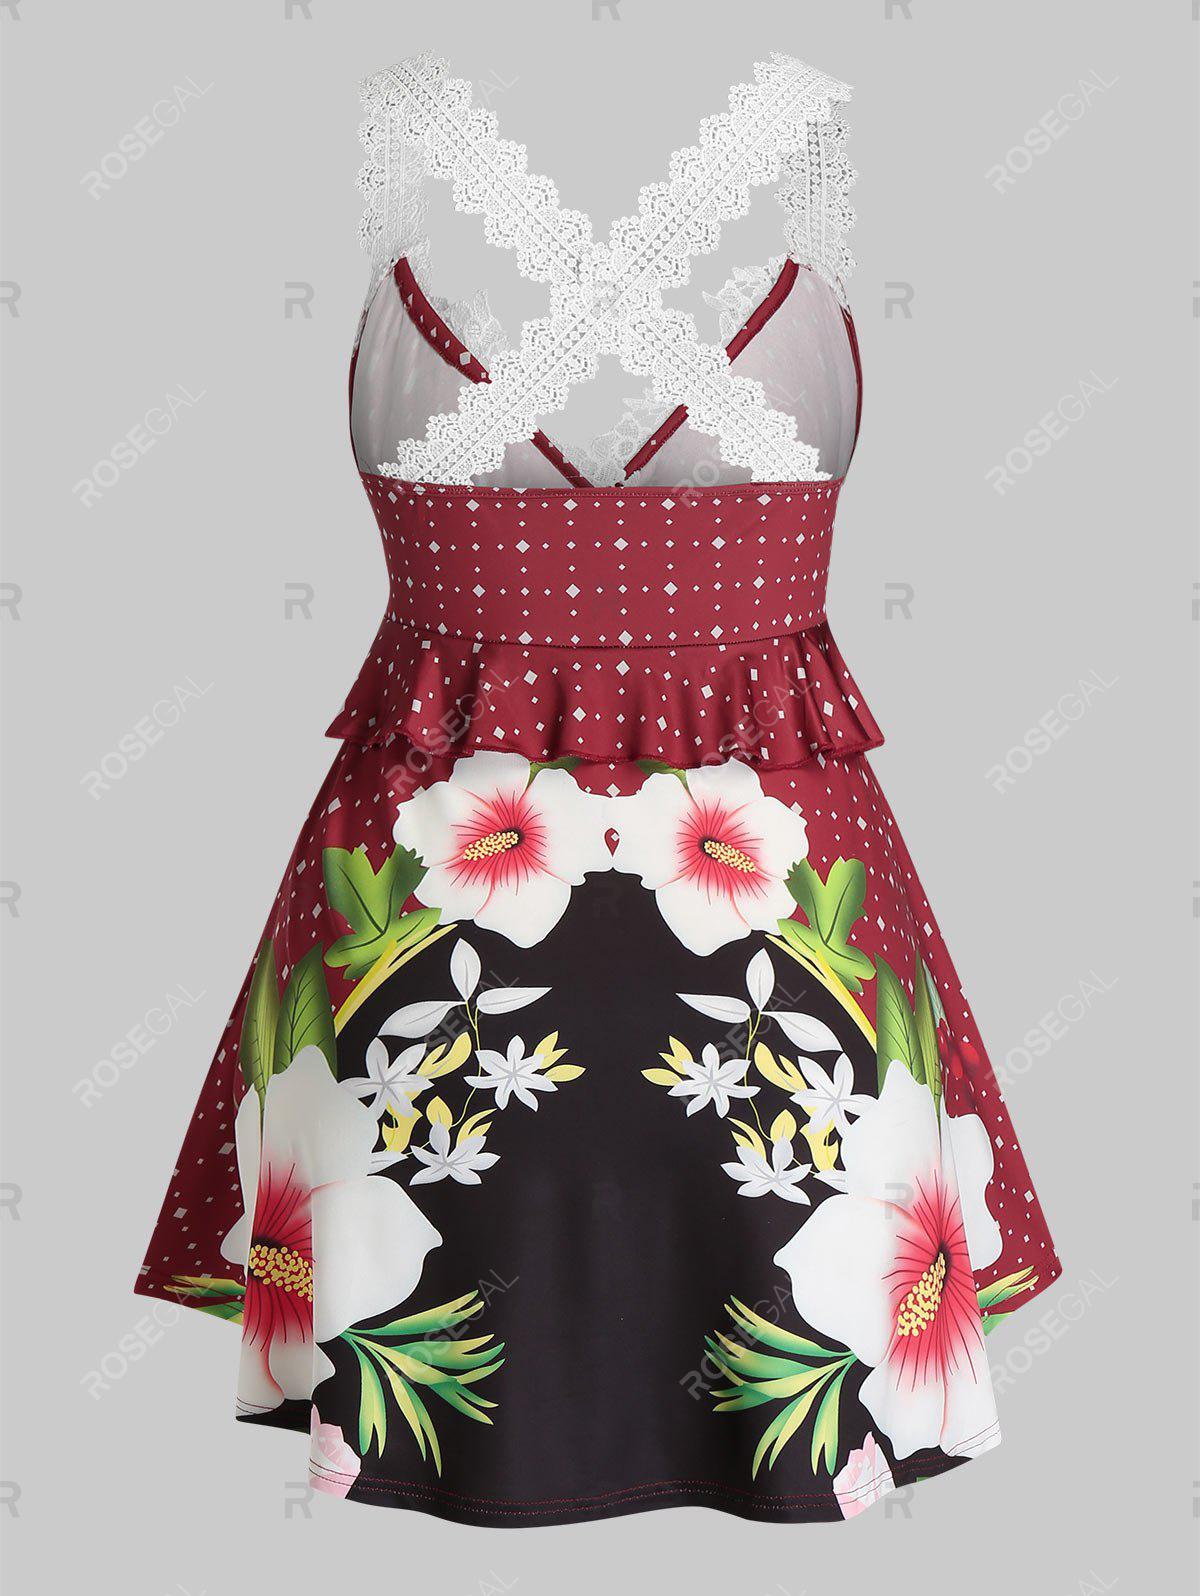 Lace Crochet Floral Crisscross Tank Top and Leggings Cottagecore Plus Size Summer Outfit